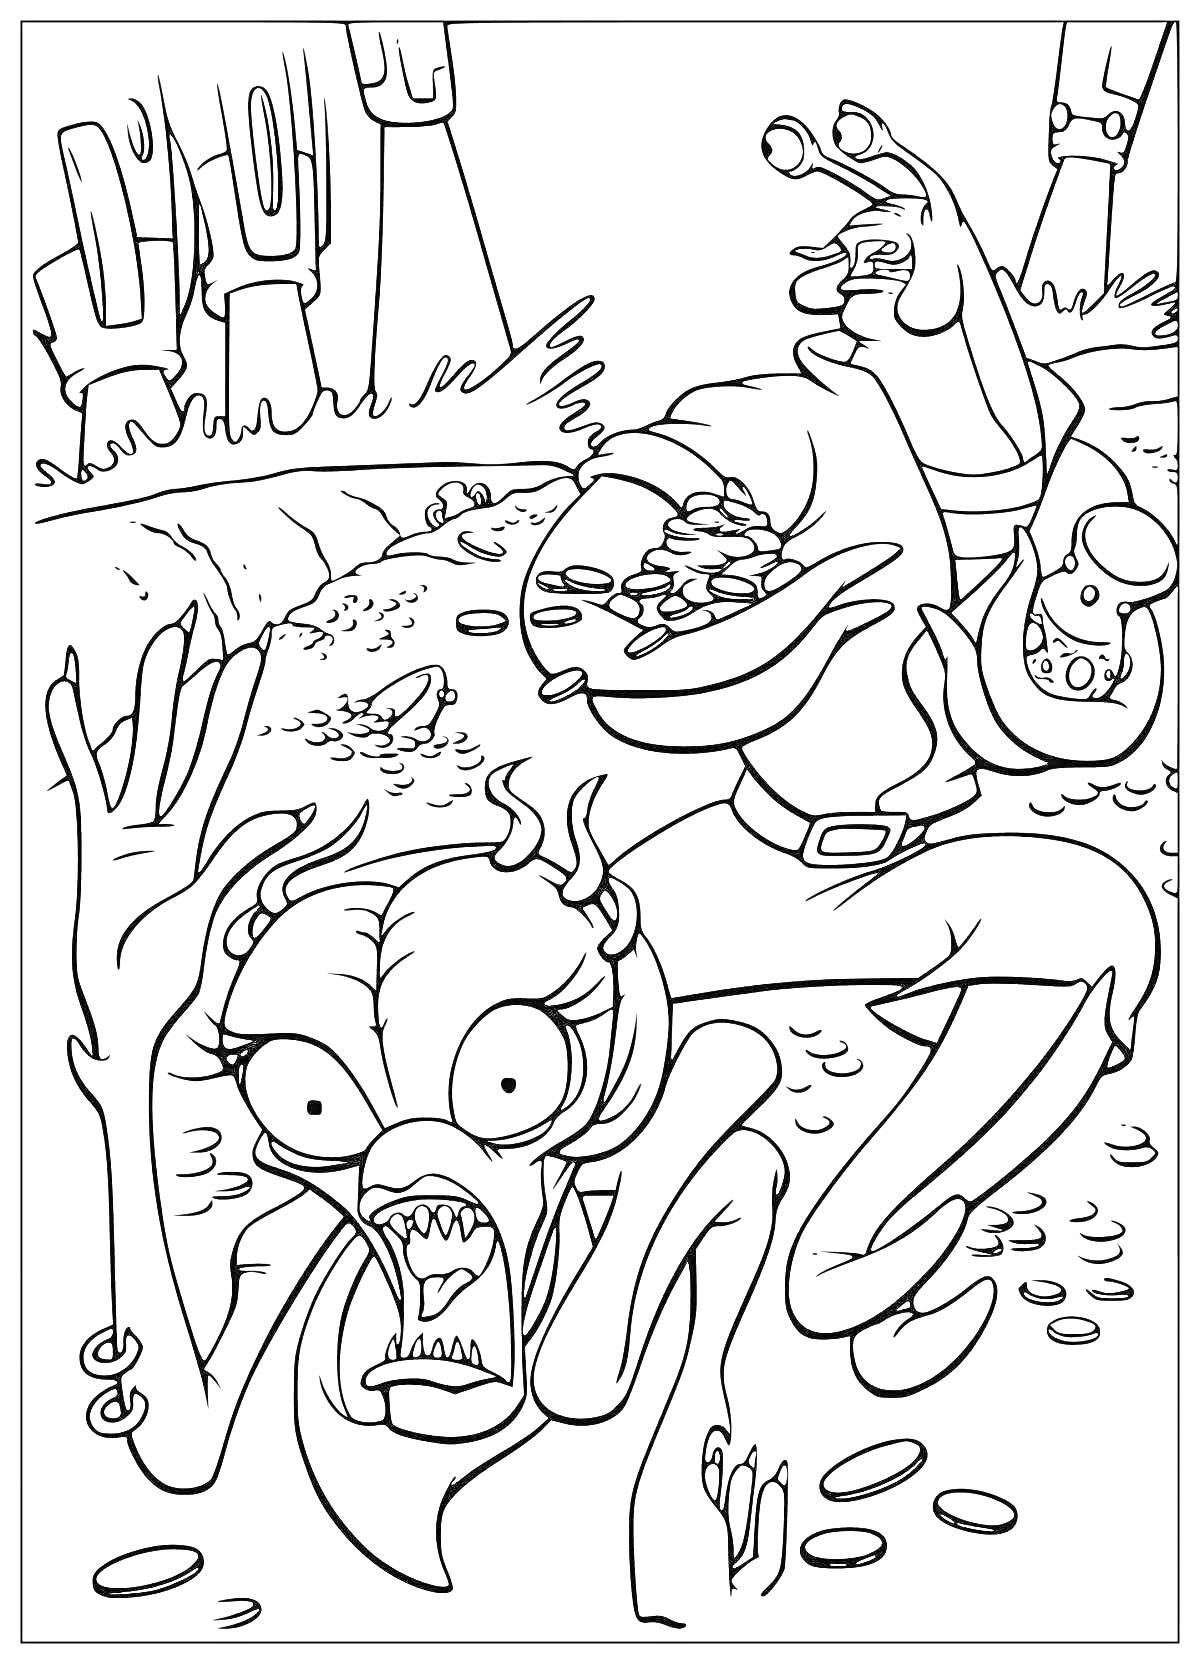 Раскраска Пришелец и человек в космическом костюме на причудливой планете с монетами